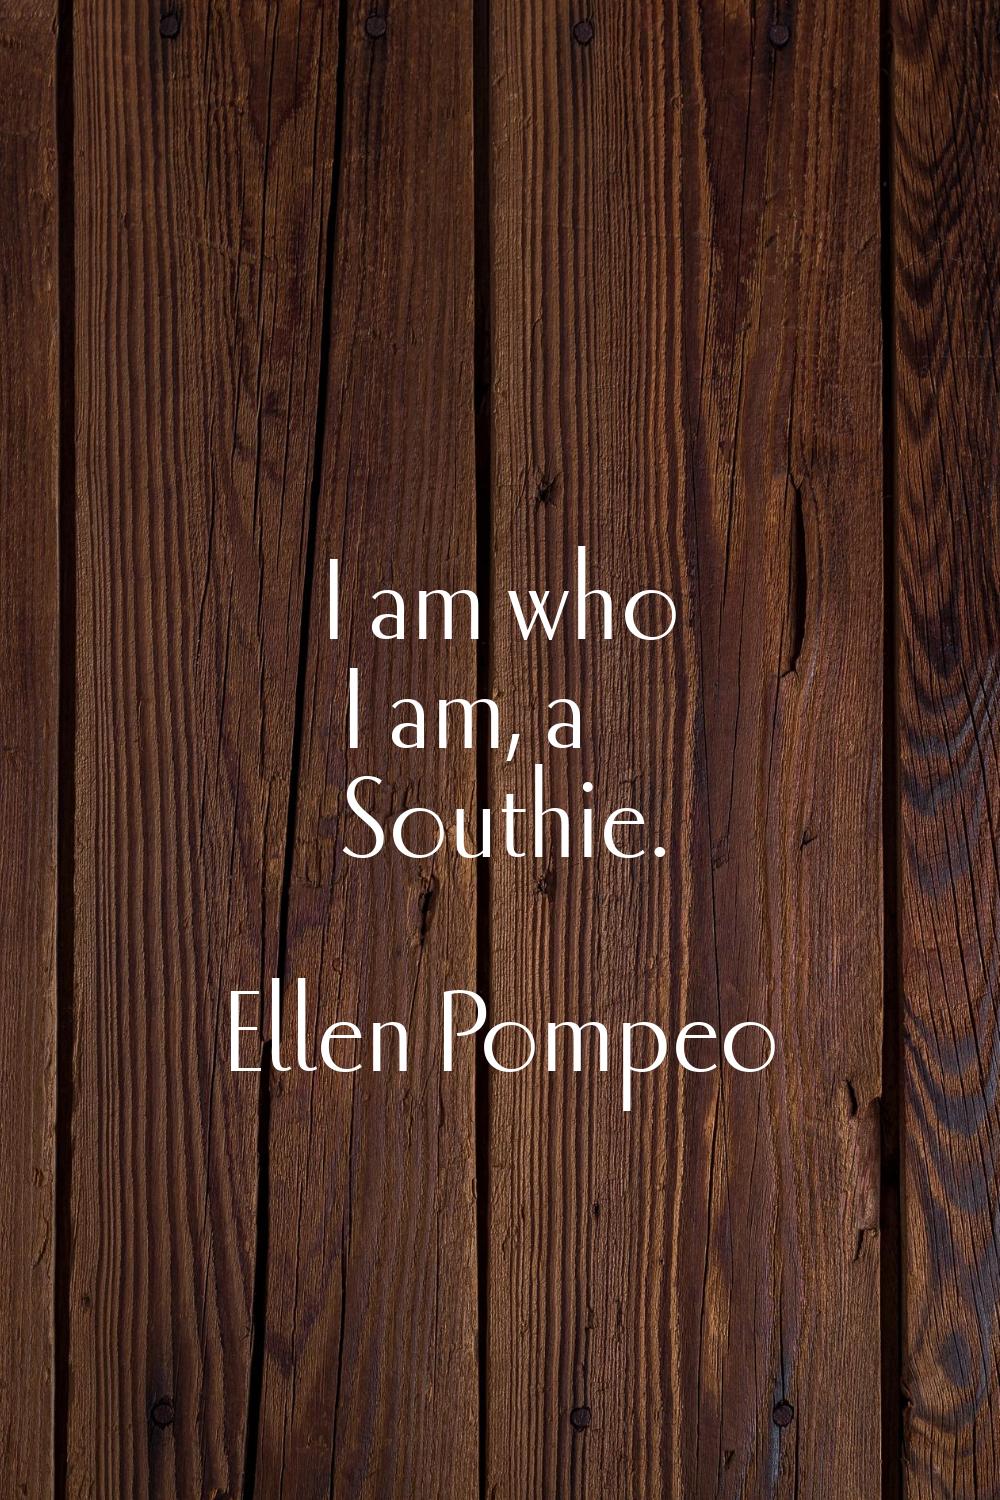 I am who I am, a Southie.